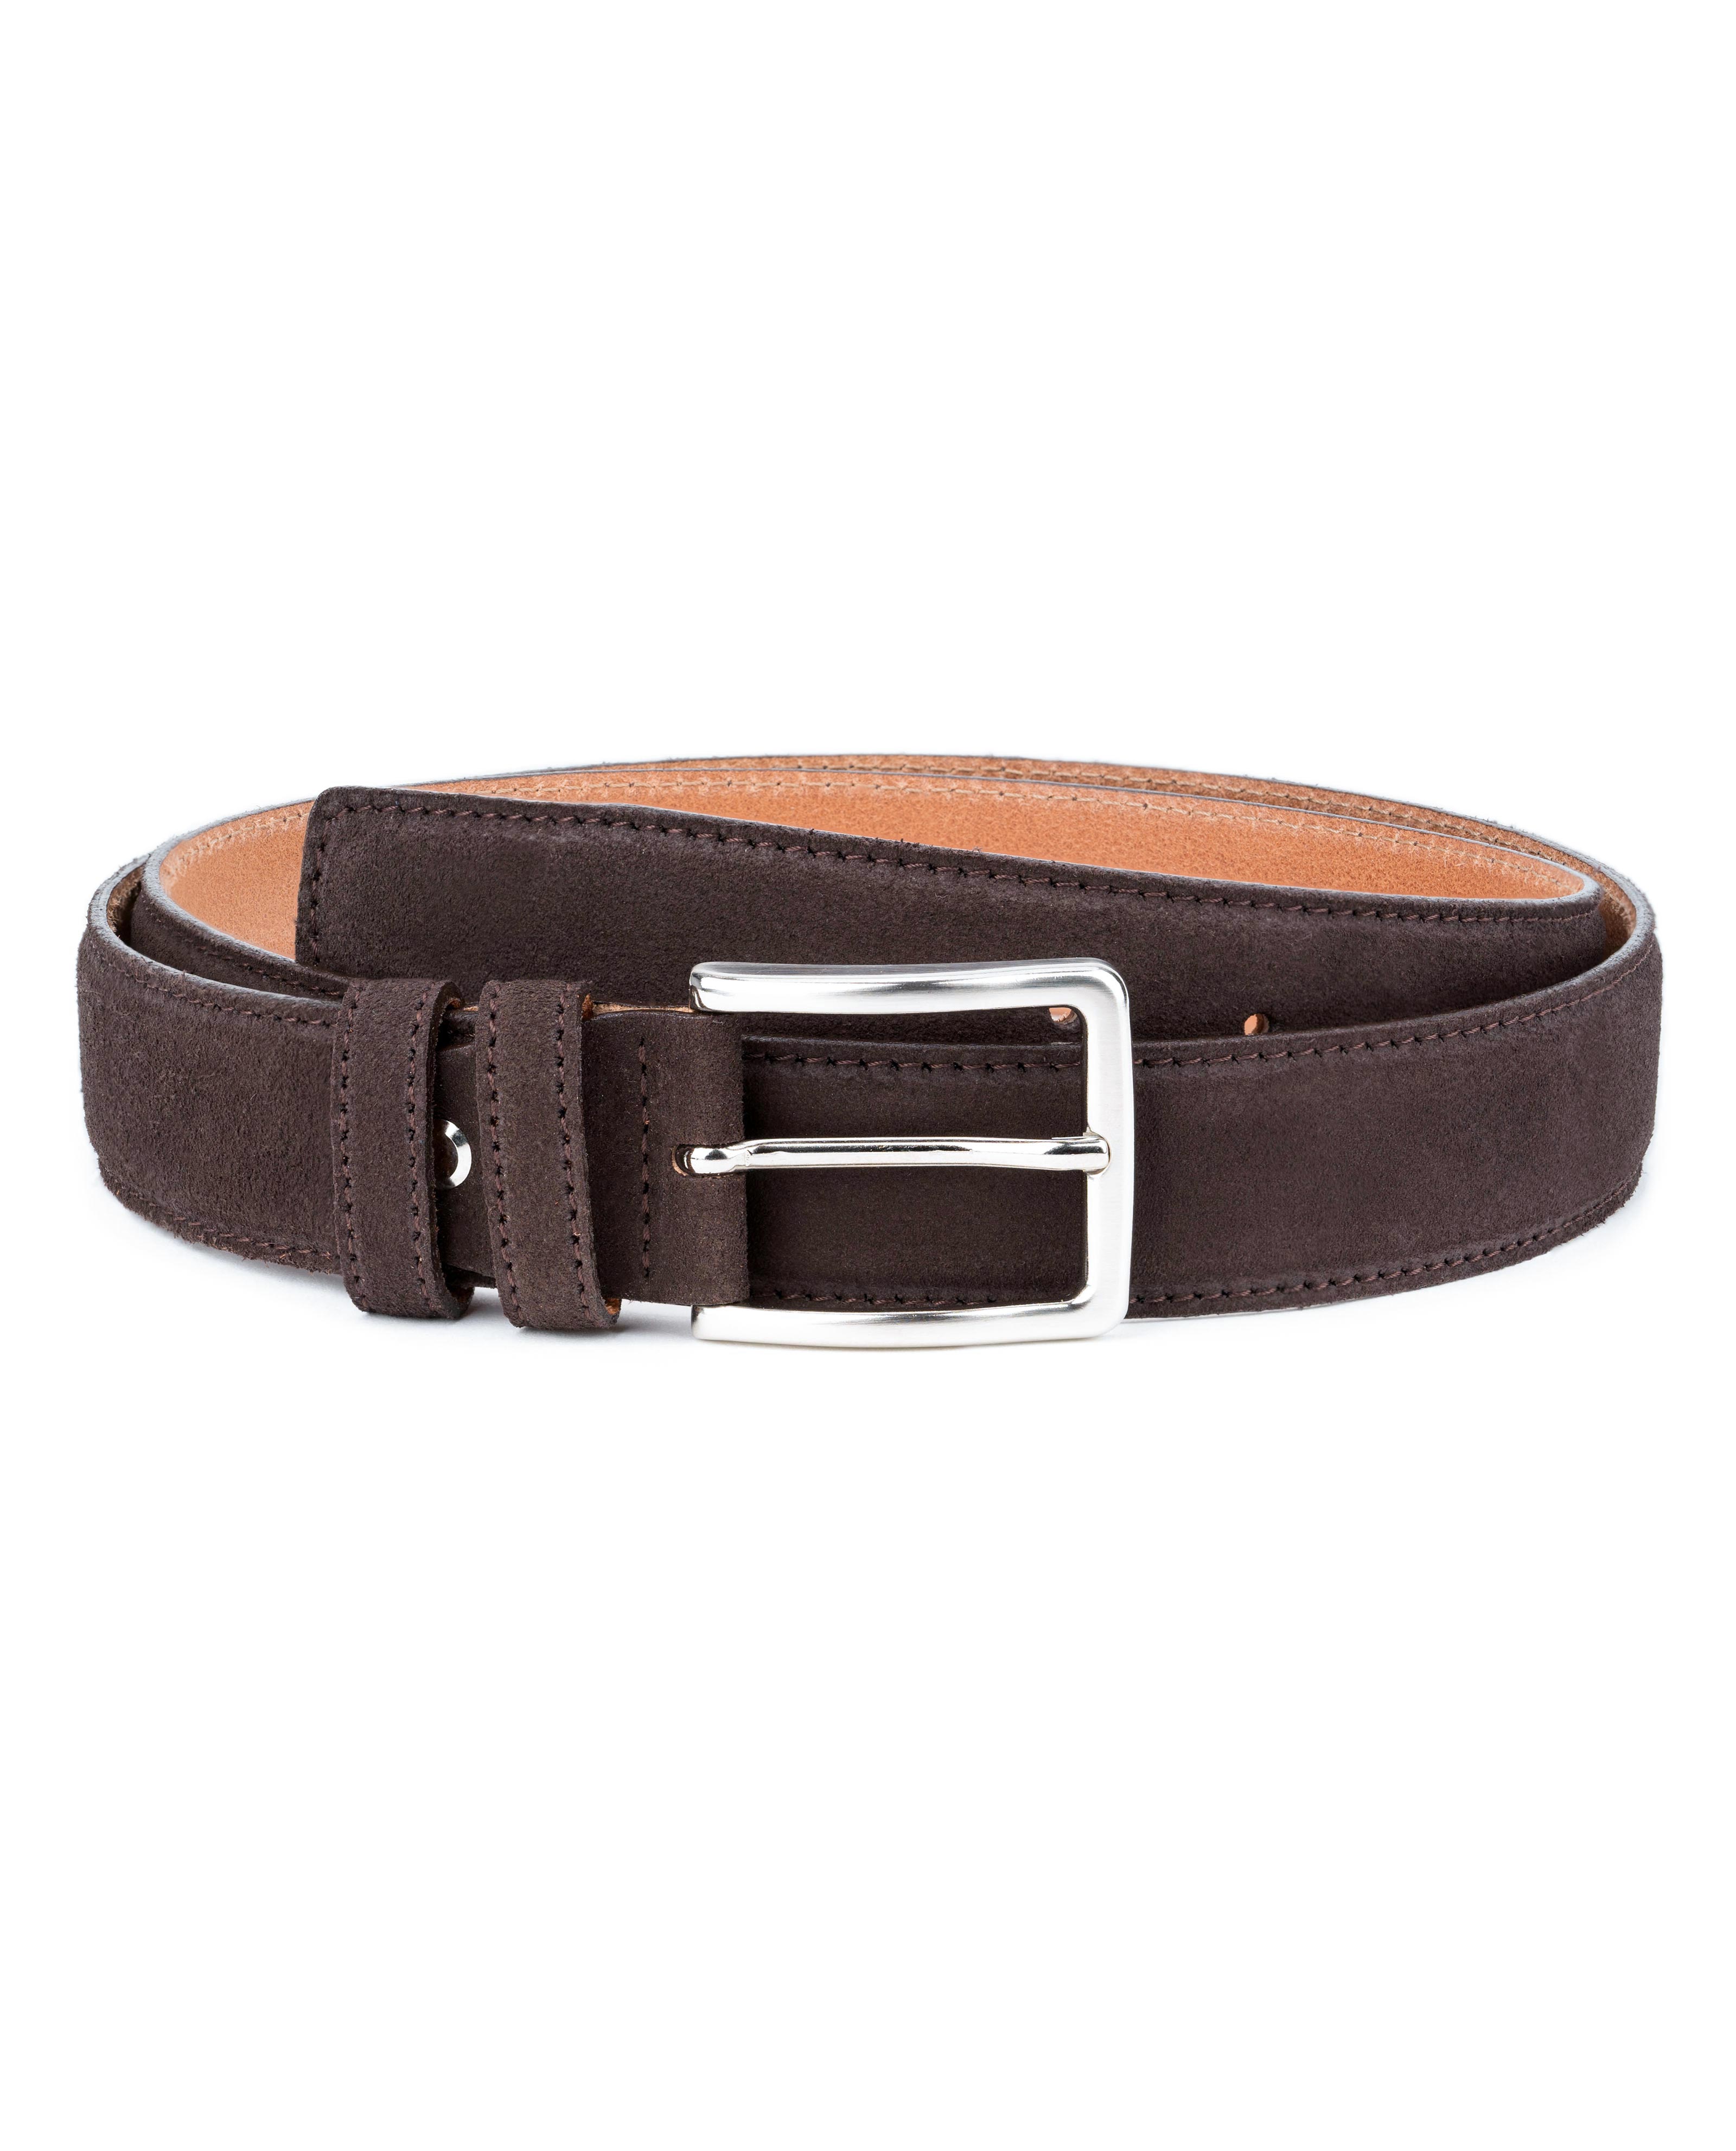 Bark Brown Suede Leather Belt